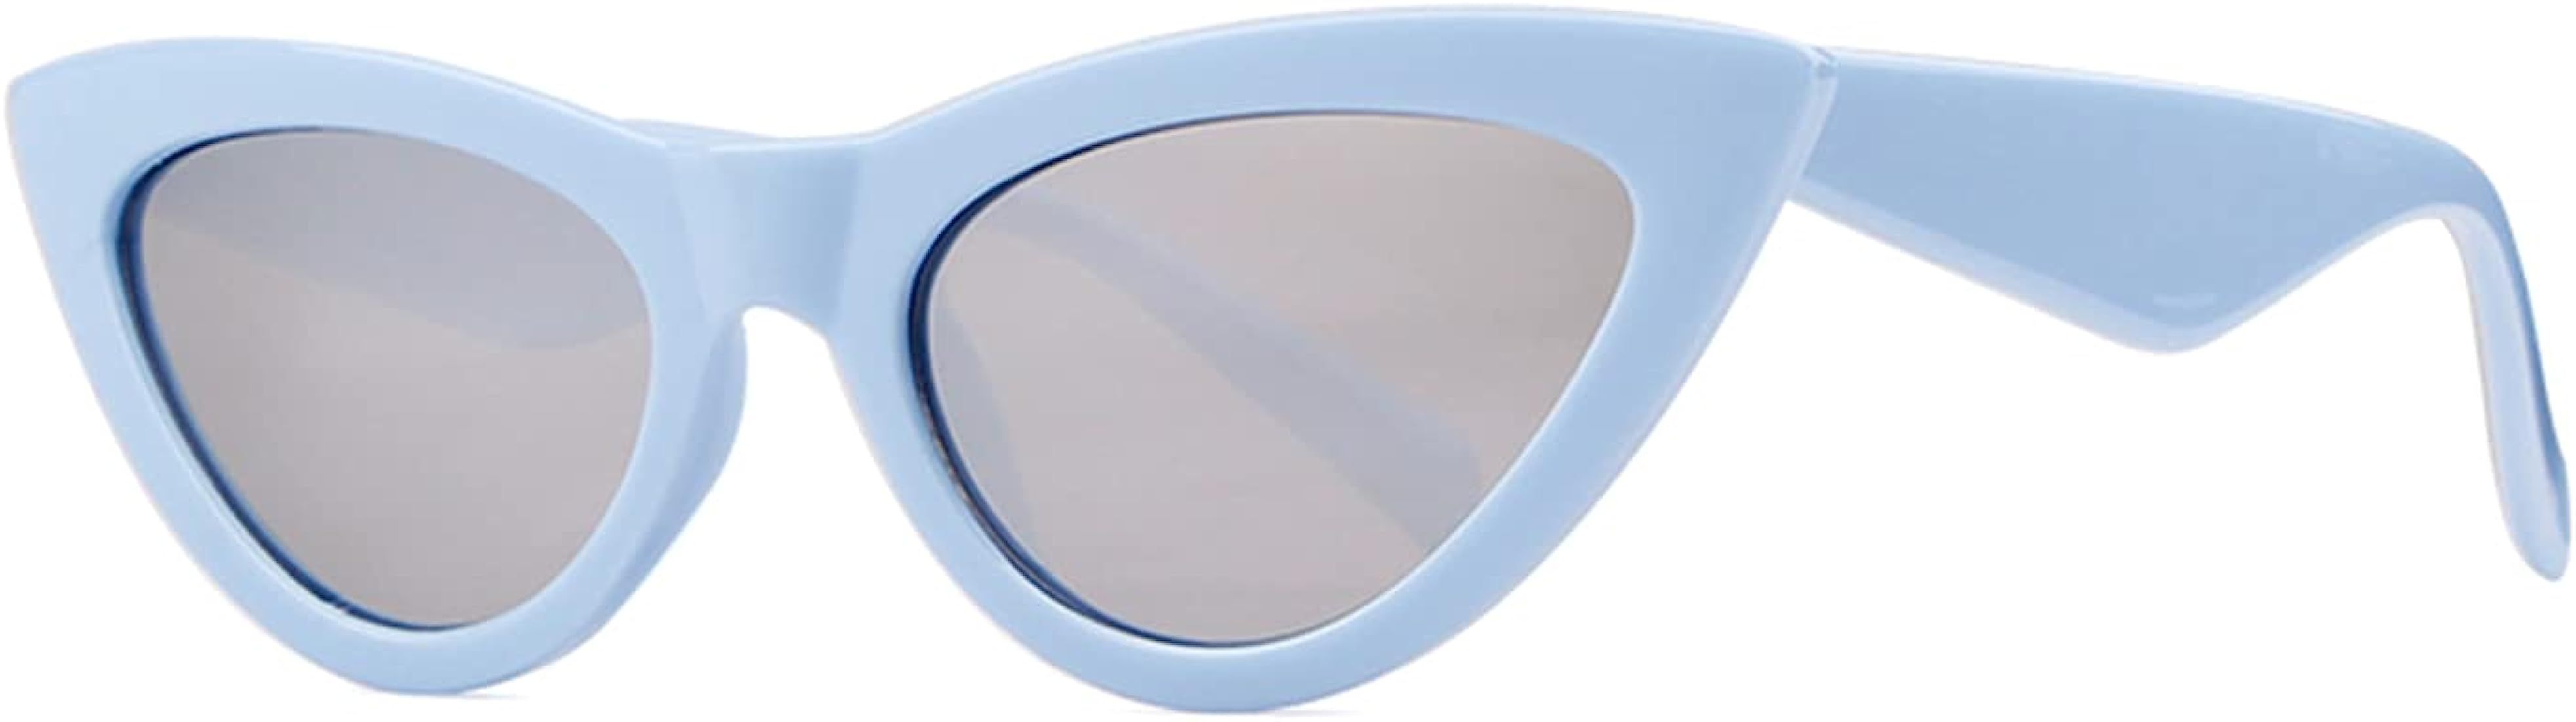 ADE WU Classic Cat Eye Sunglasses For Women Retro Vintage Cateye Sun Glasses UV400 Protection | Amazon (US)